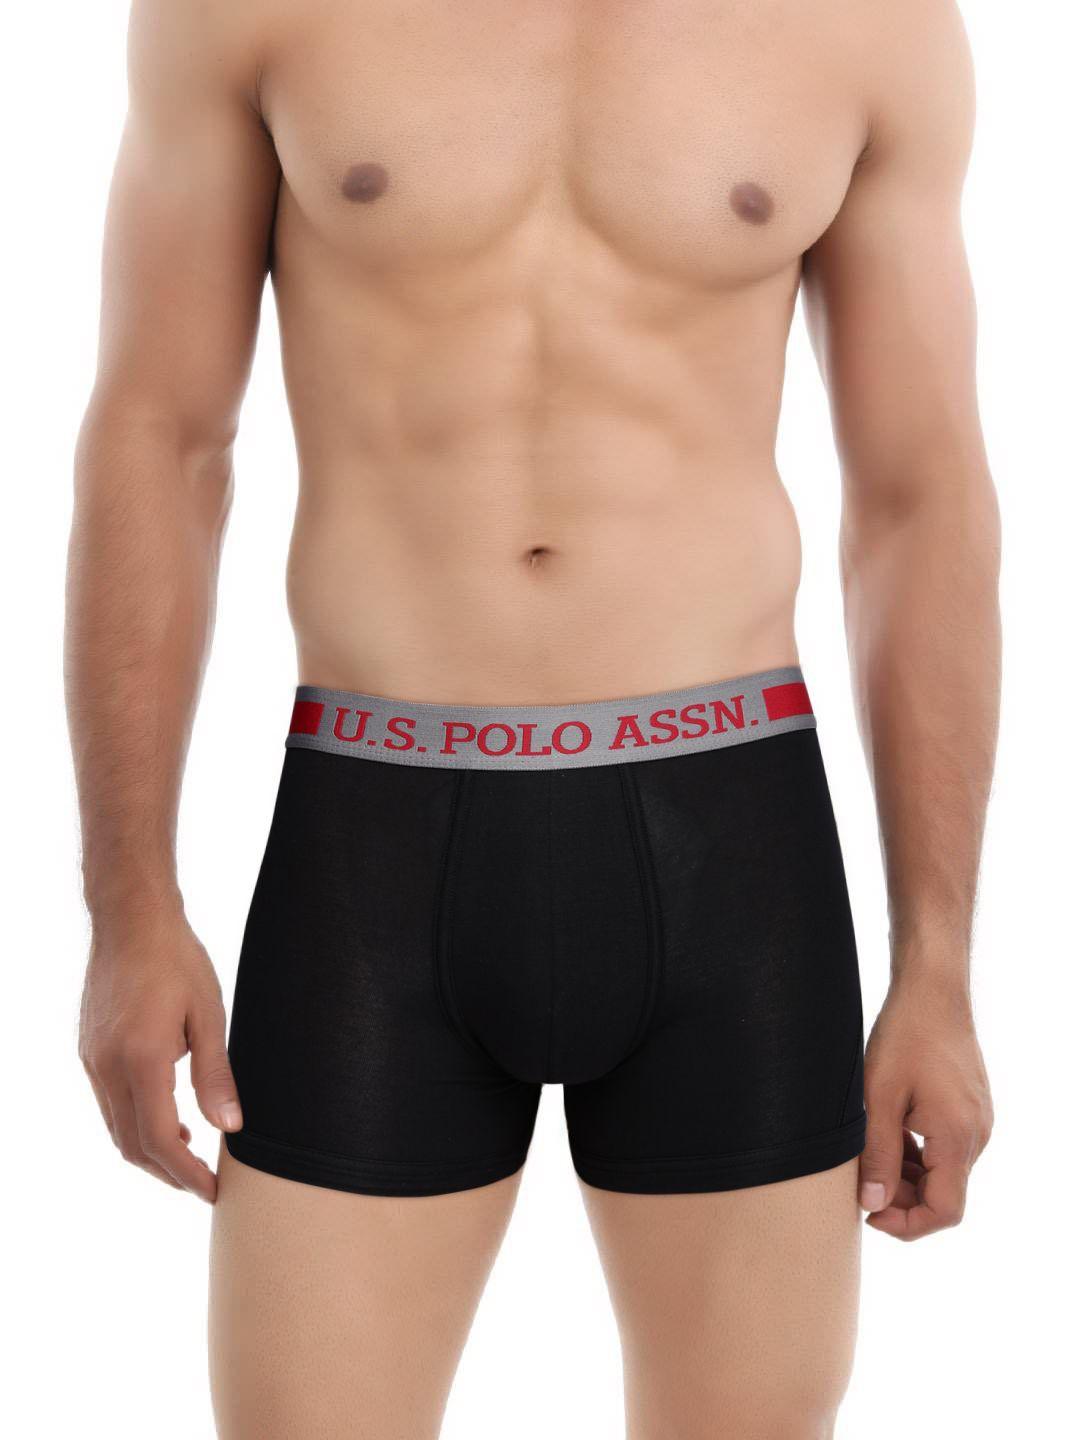 u.s. polo assn. men black classic trunks i101-002-pl